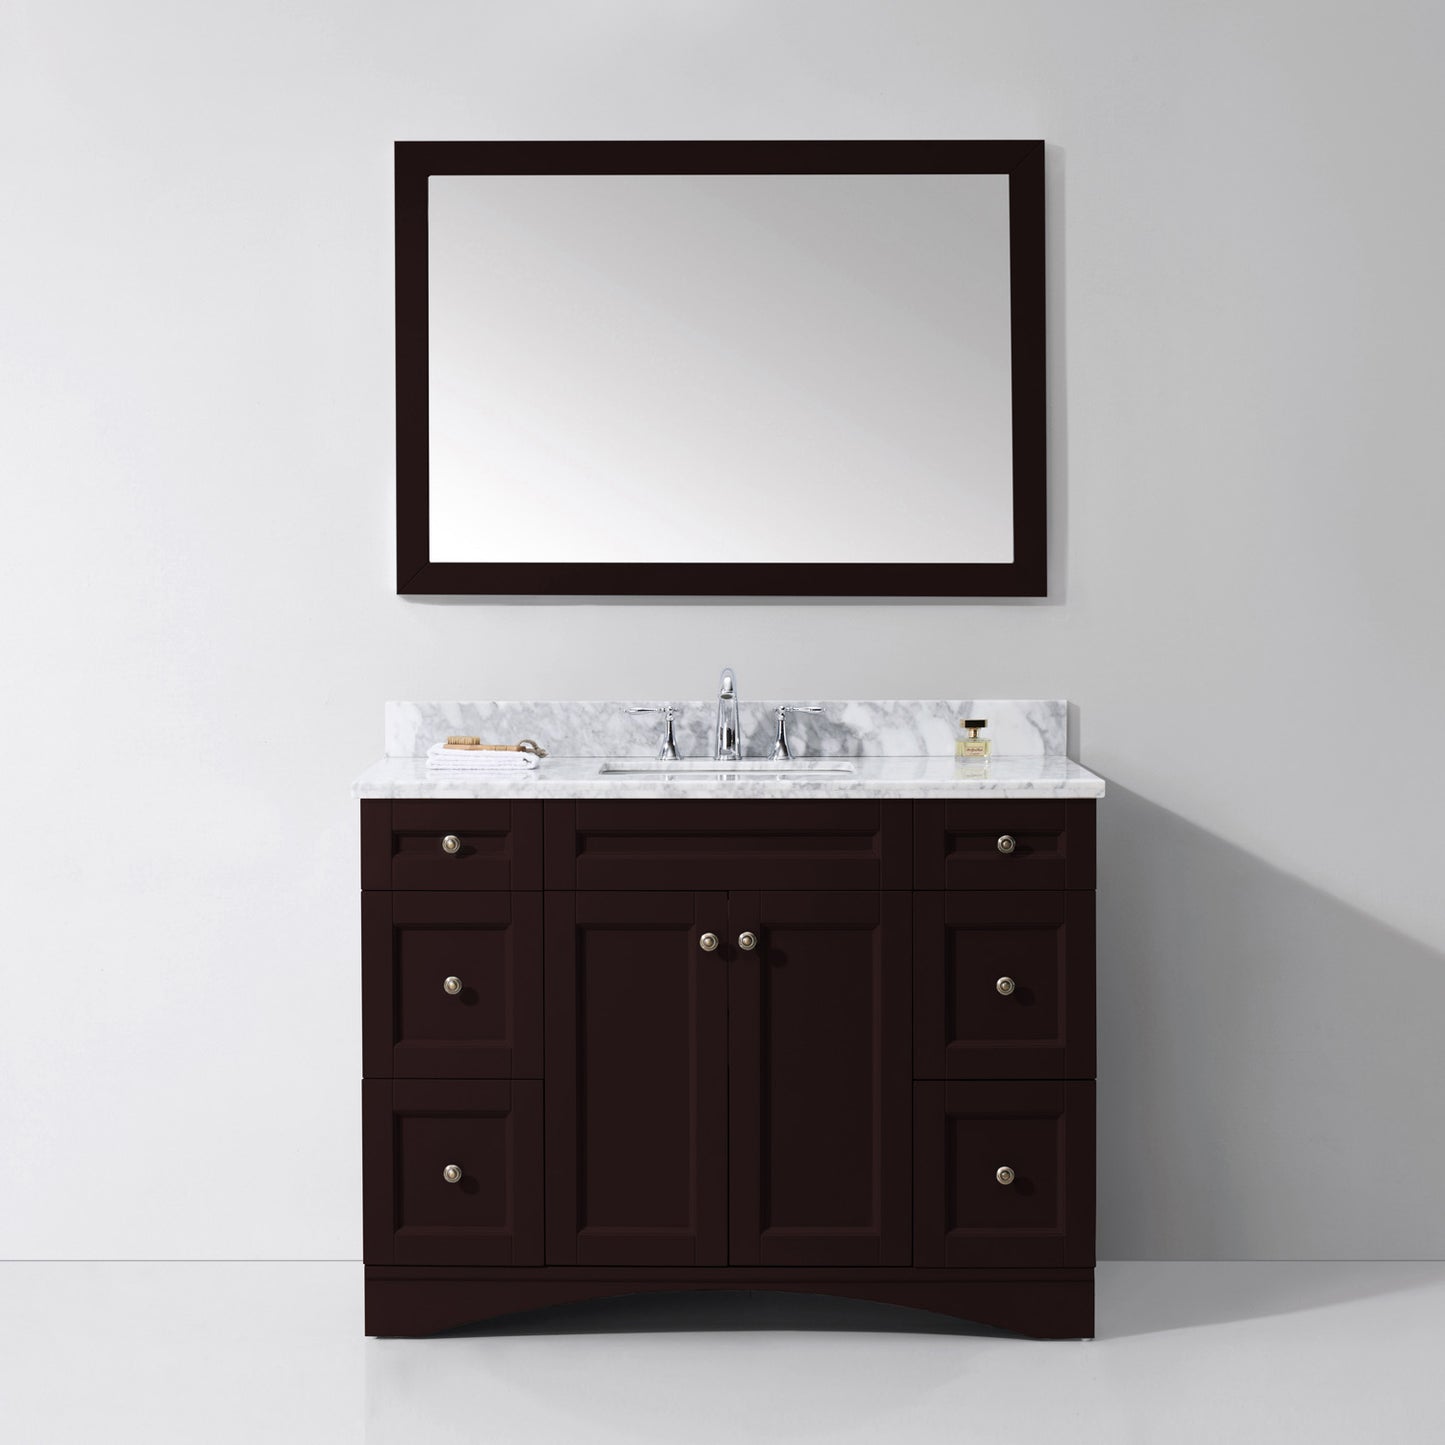 Virtu USA Elise 48" Single Bath Vanity in Espresso with Marble Top and Square Sink with Mirror - Luxe Bathroom Vanities Luxury Bathroom Fixtures Bathroom Furniture